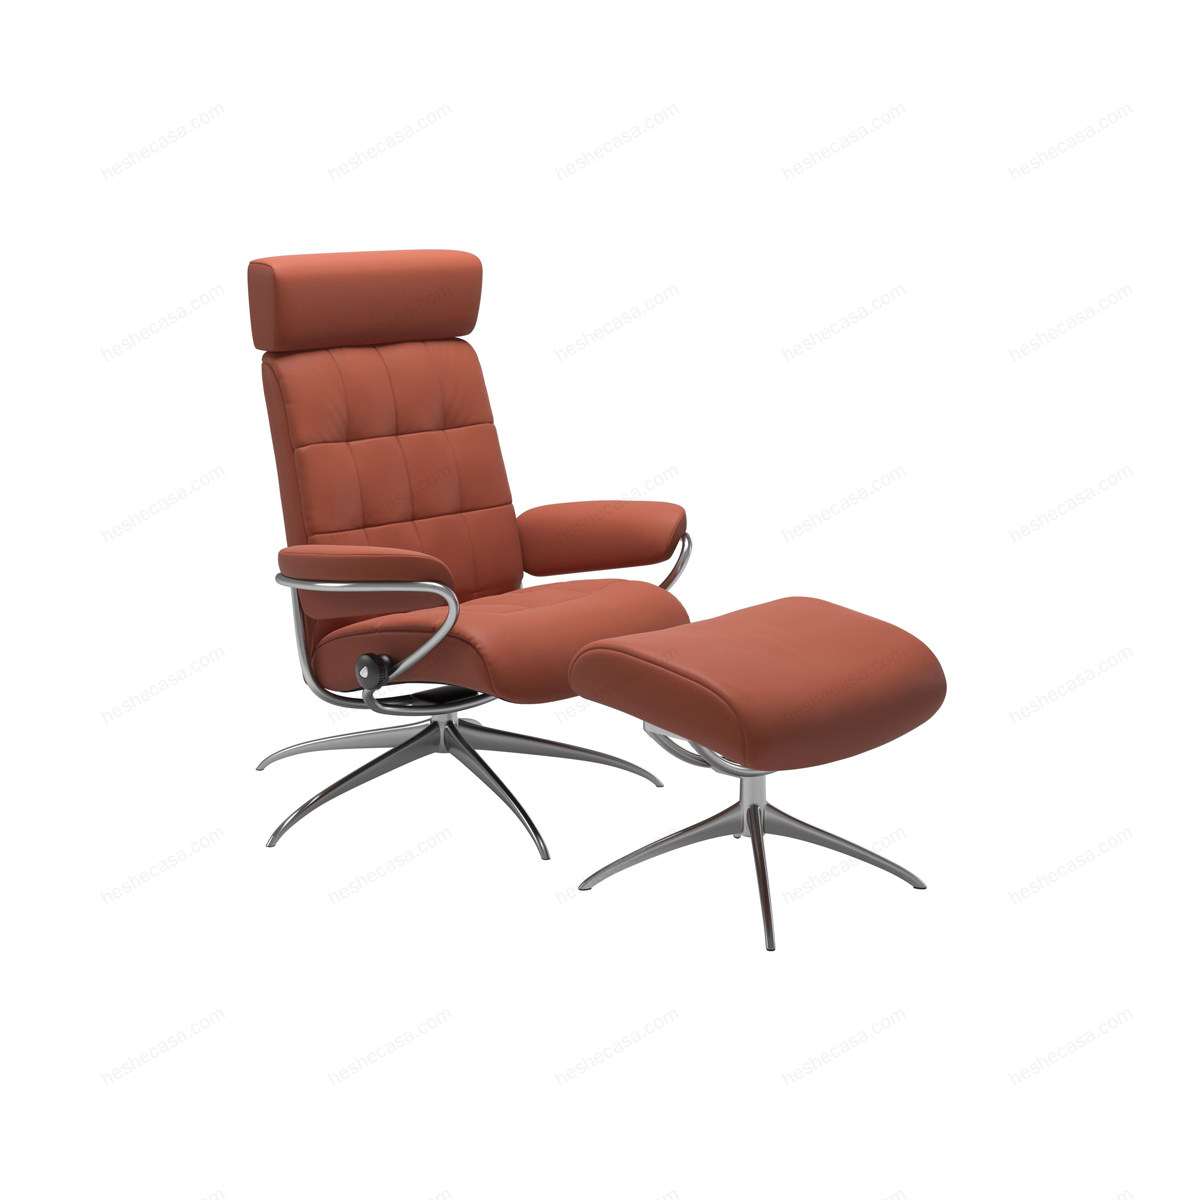 London Chair Adjustable Headrest扶手椅